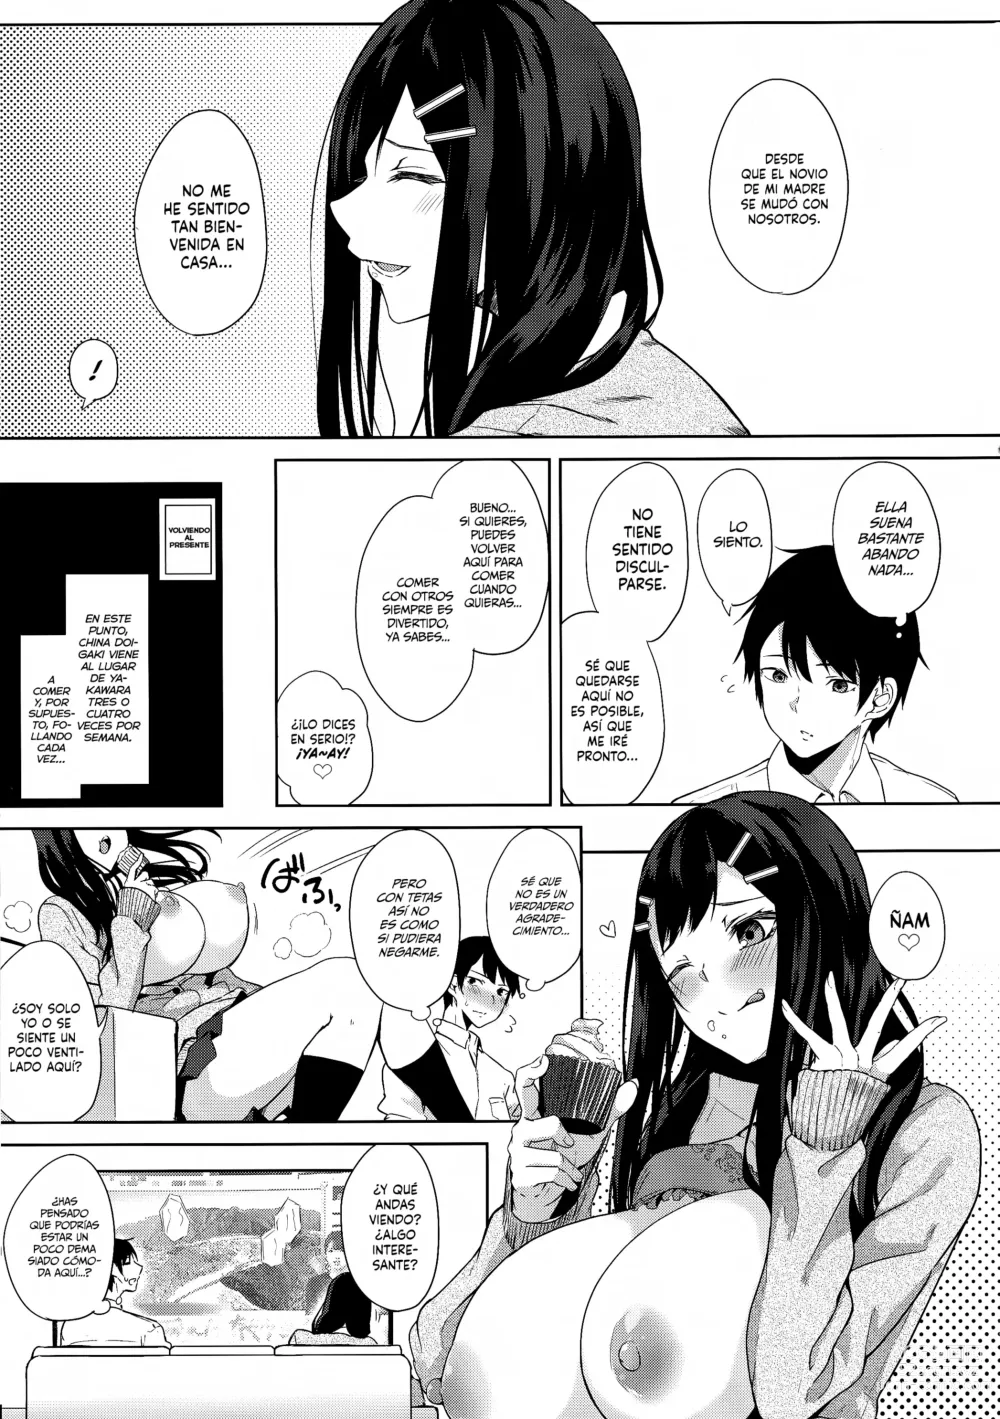 Page 9 of doujinshi Kimiyoubi no Atoaji wa